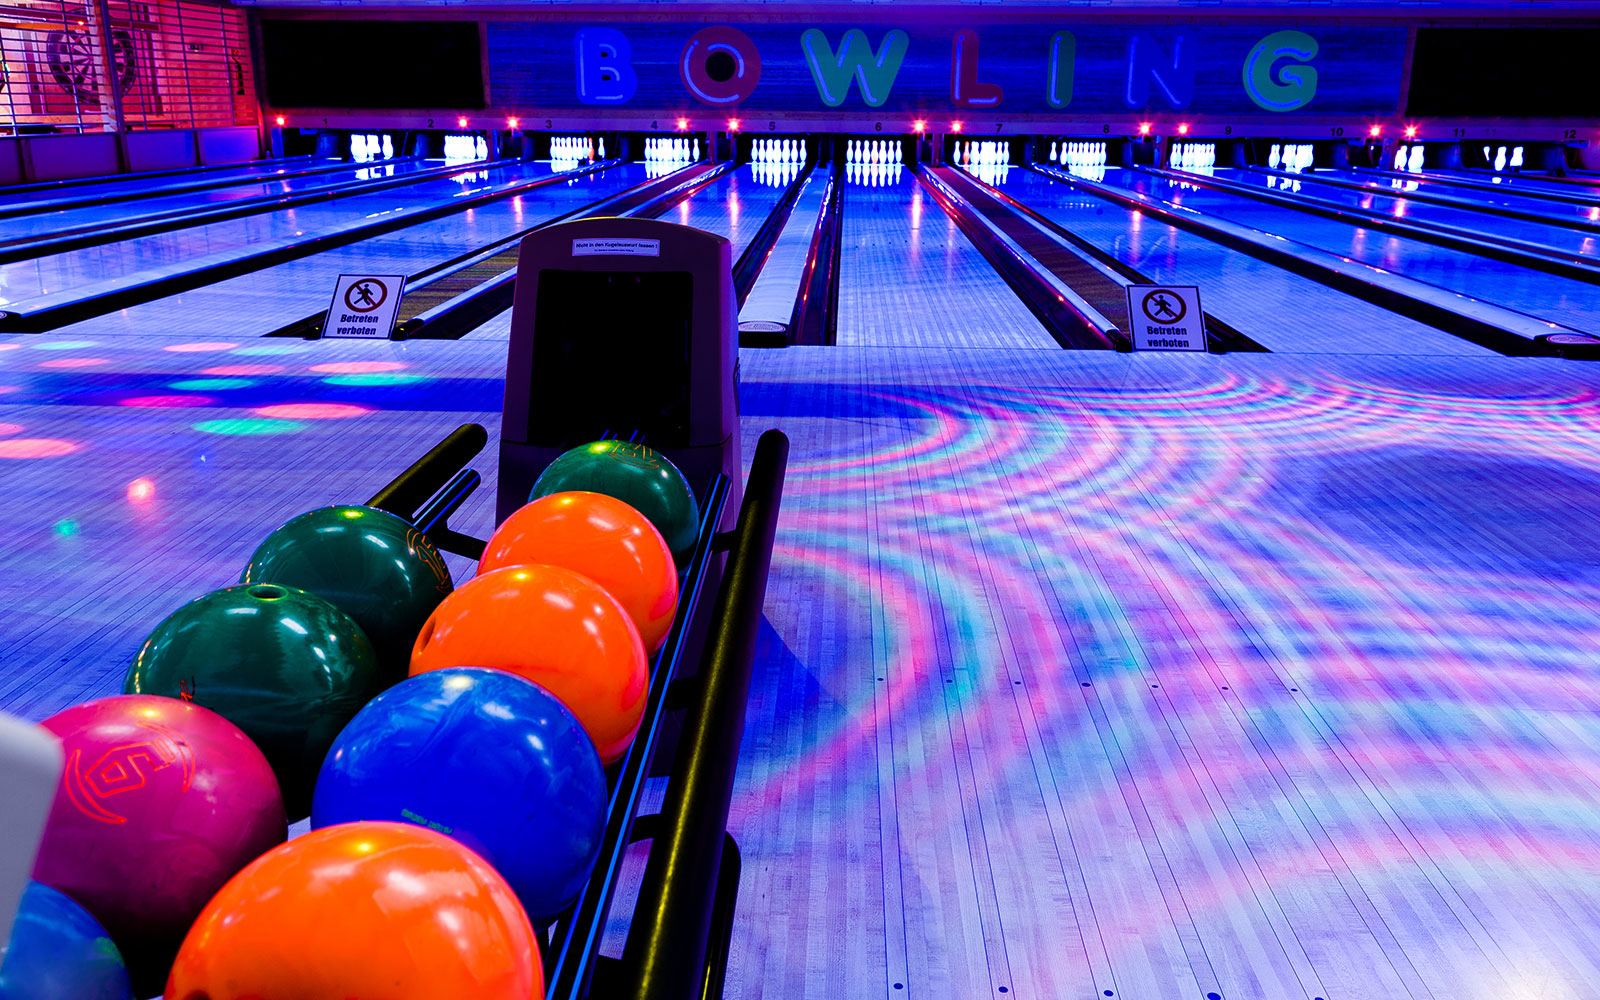 Pin Strikes Entertainment Center - Stockbridge, GA Bowling Alley